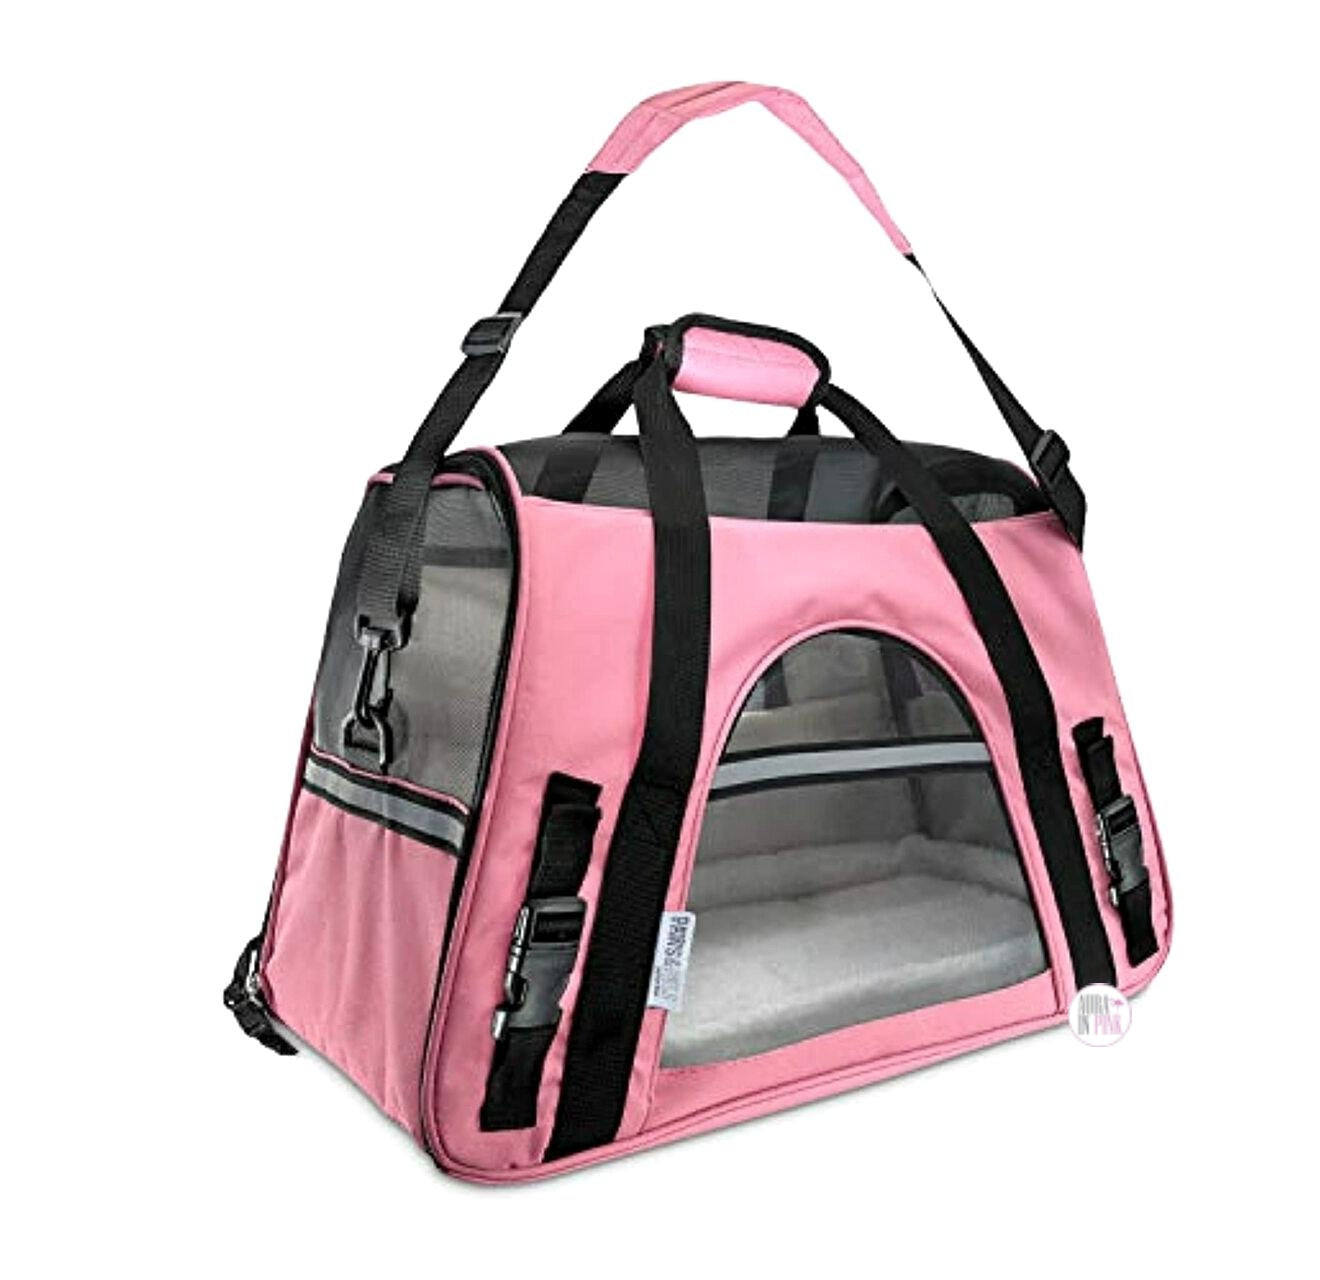 BELLAMORE GIFT Pet Carrier Bag Cat Bed Rabbit Handbag Airline